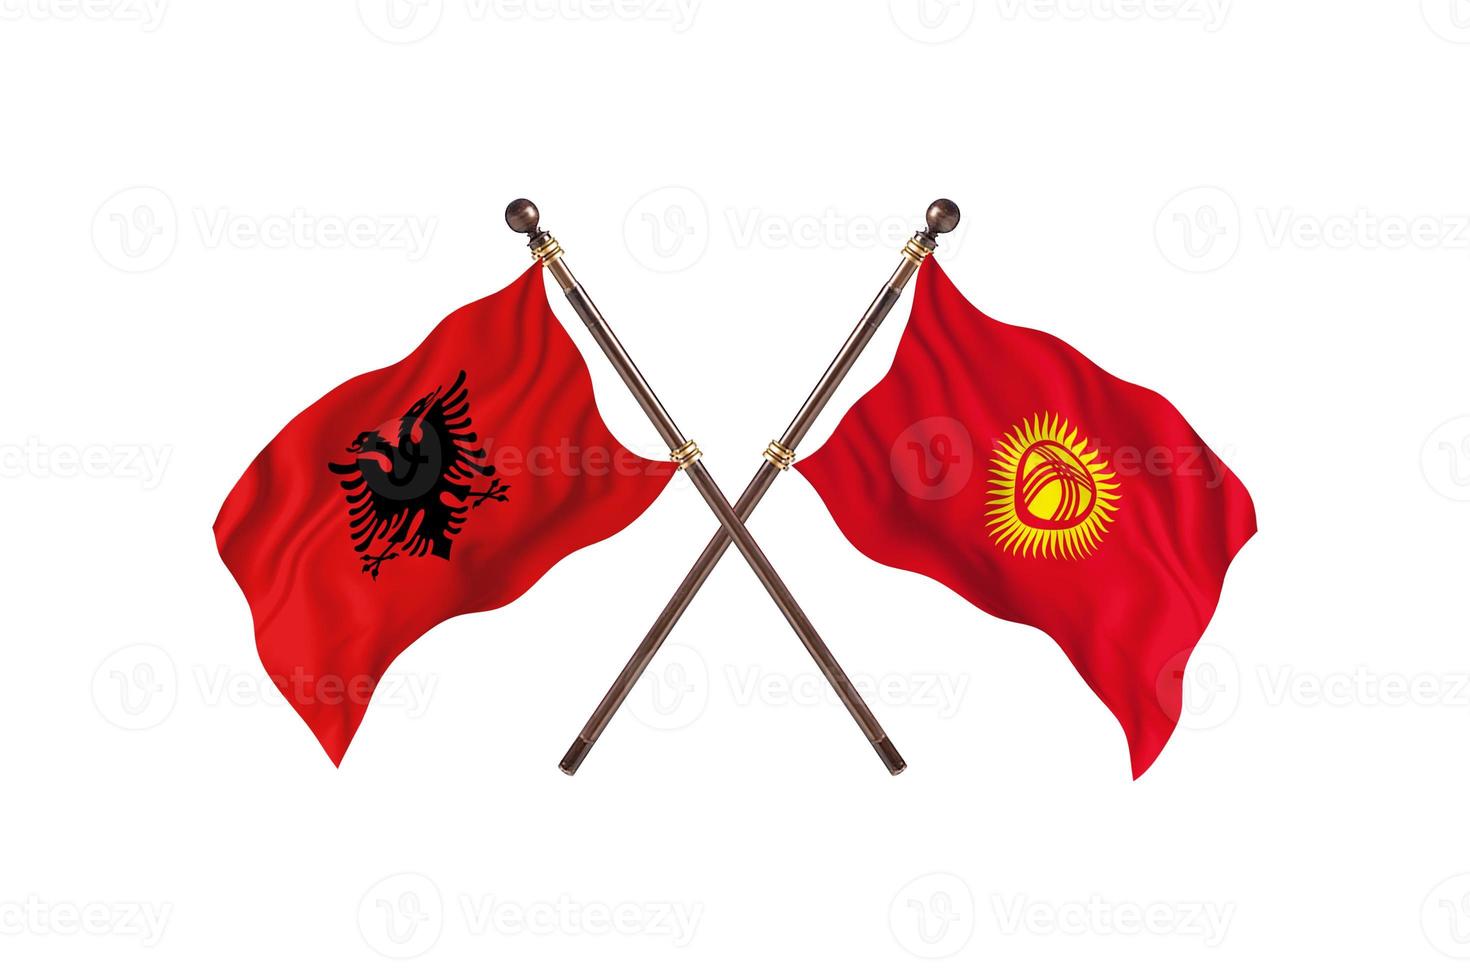 Albanië versus Kirgizië twee land vlaggen foto